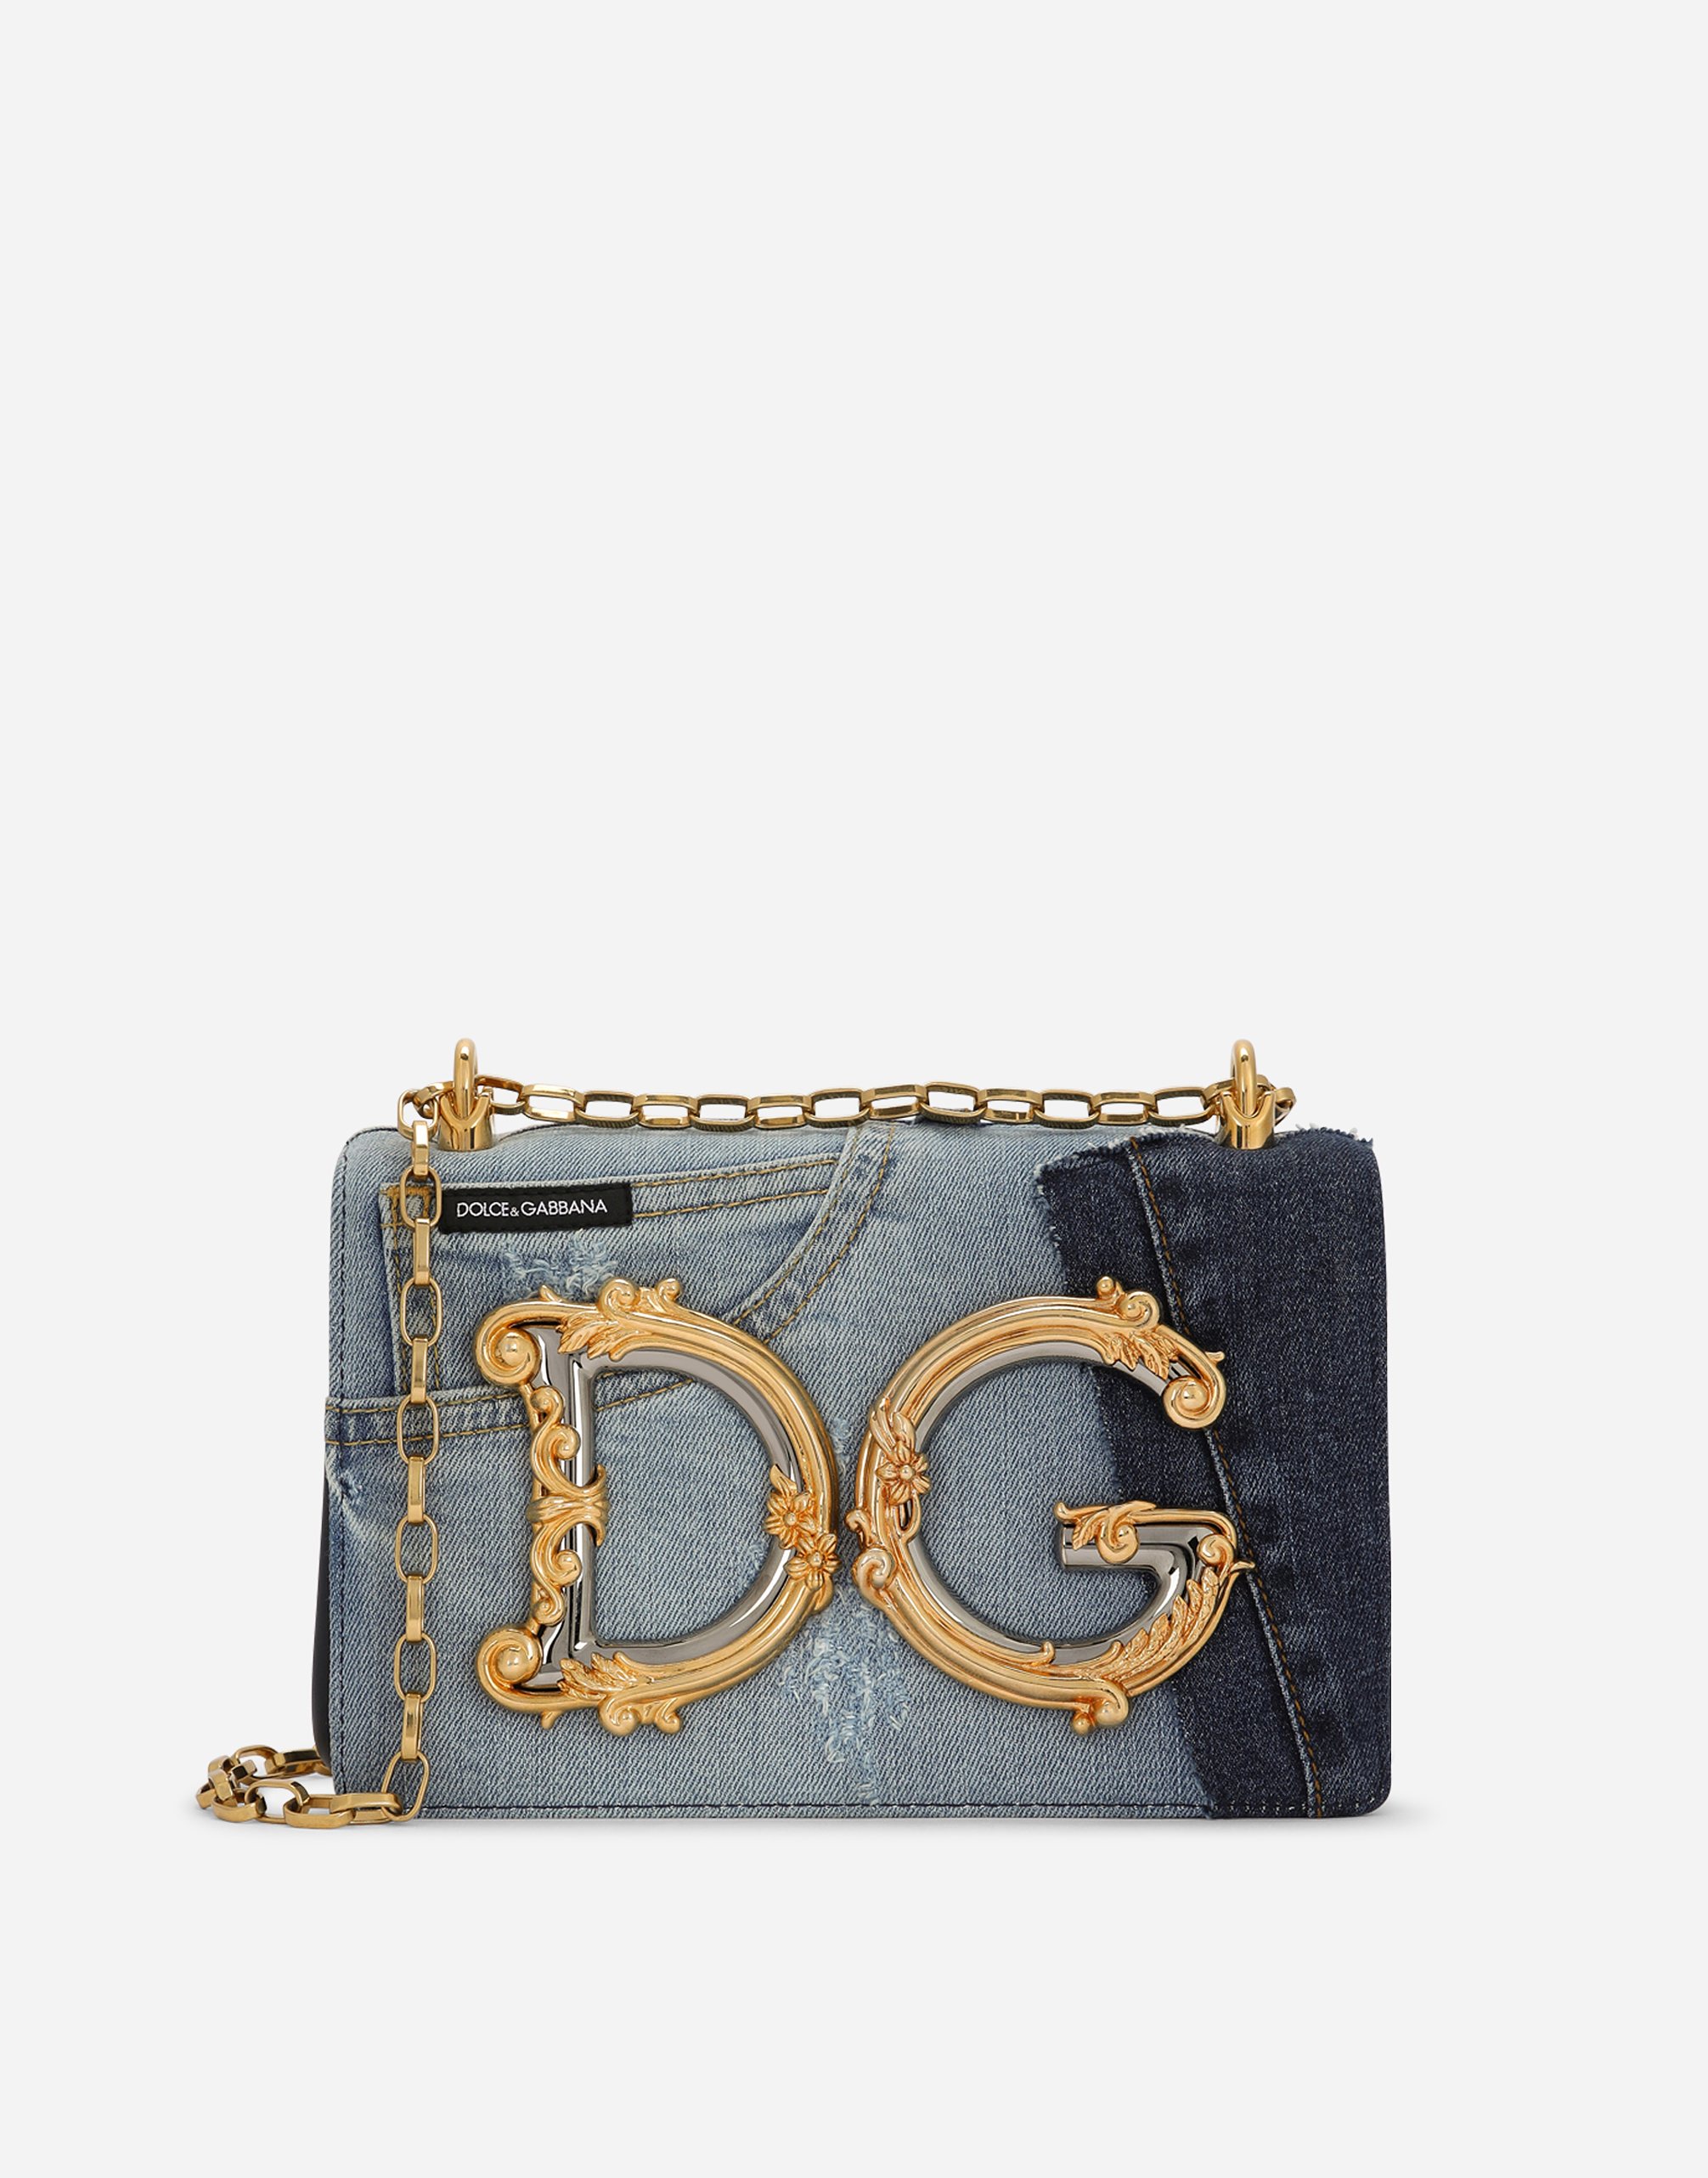 Dolce & Gabbana Dg Girls Bag In Patchwork Denim And Plain Calfskin